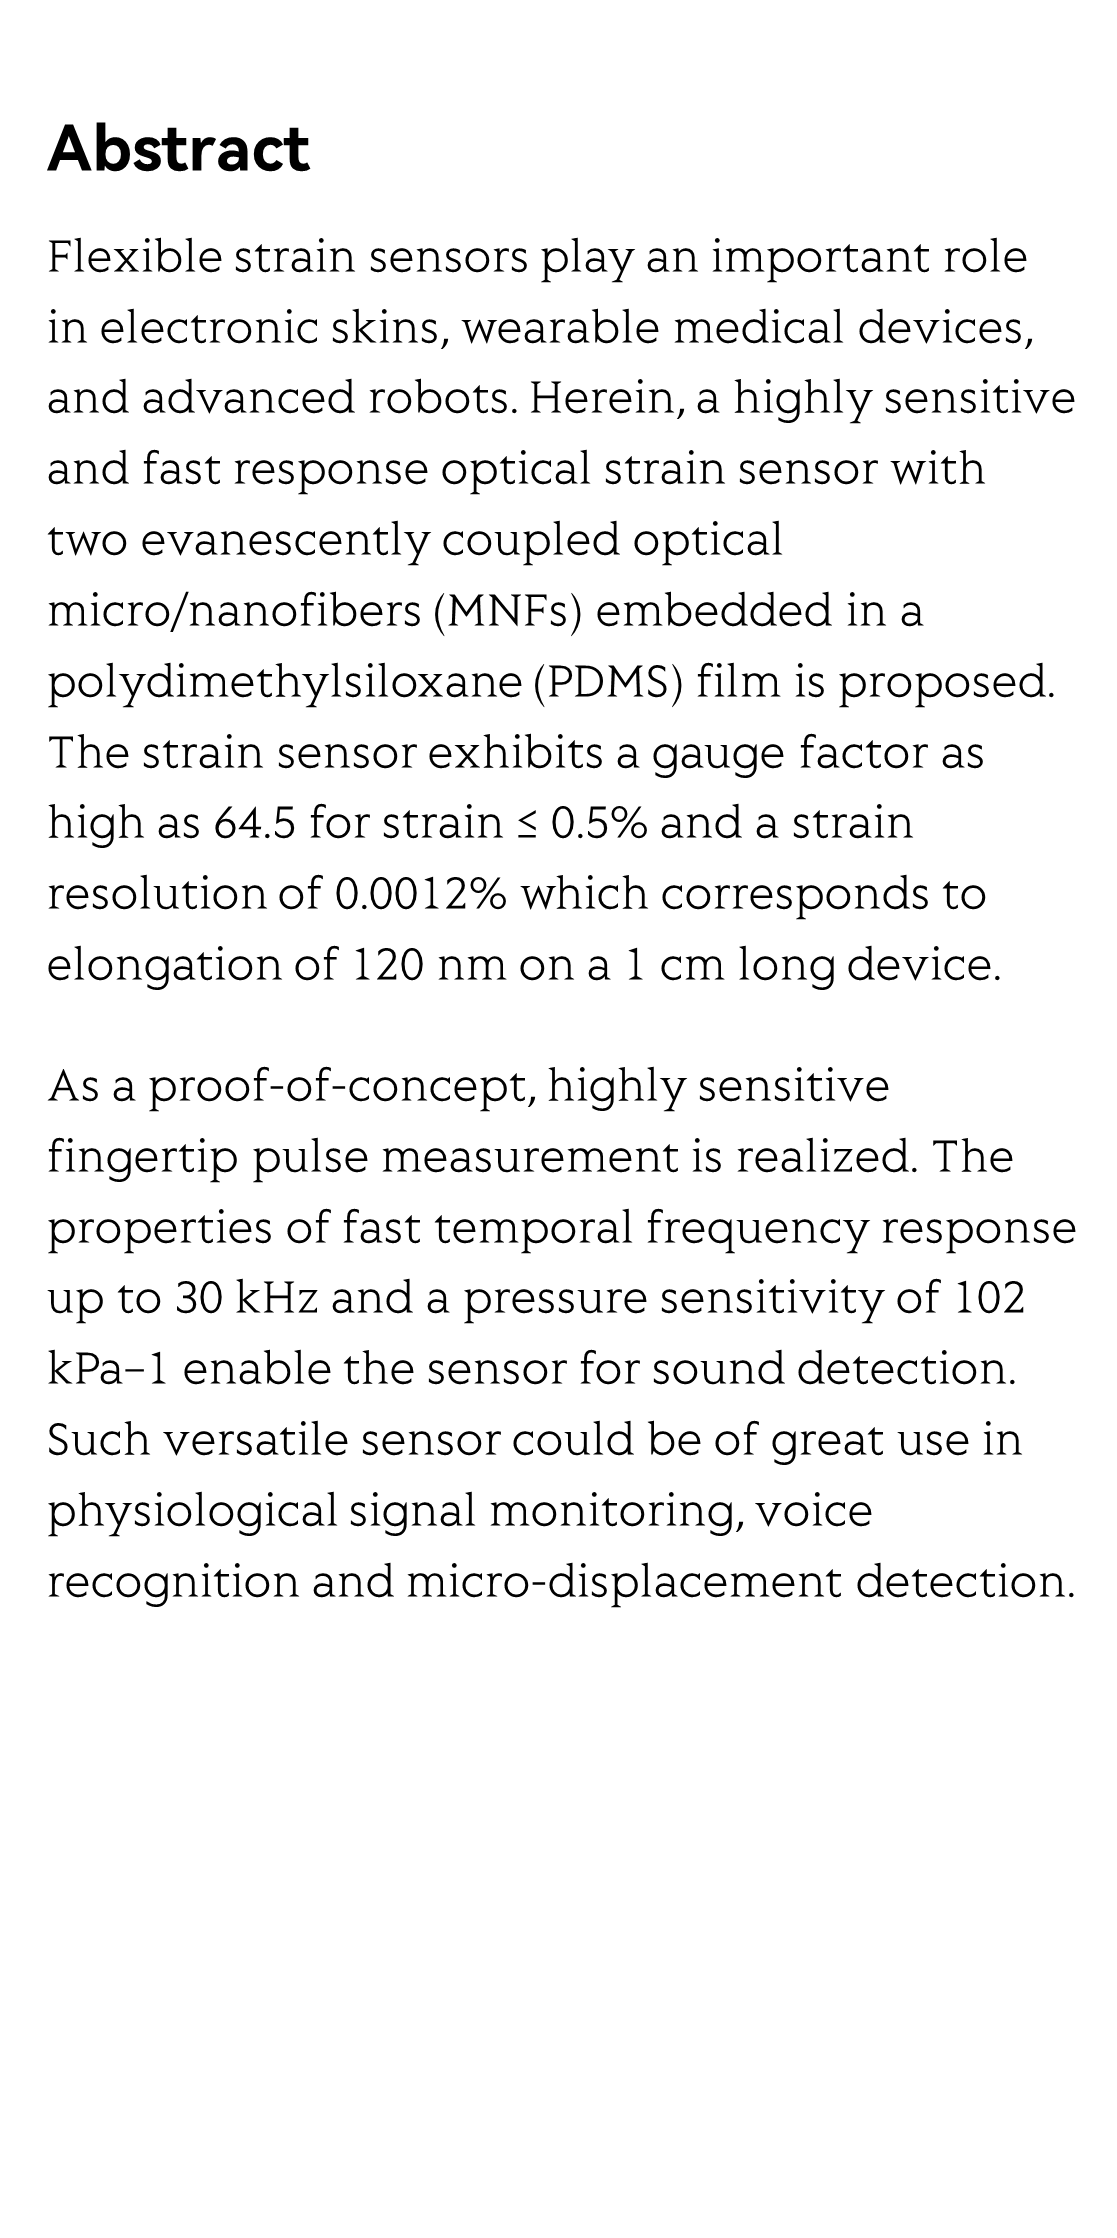 Highly sensitive and fast response strain sensor based on evanescently coupled micro/nanofibers_2